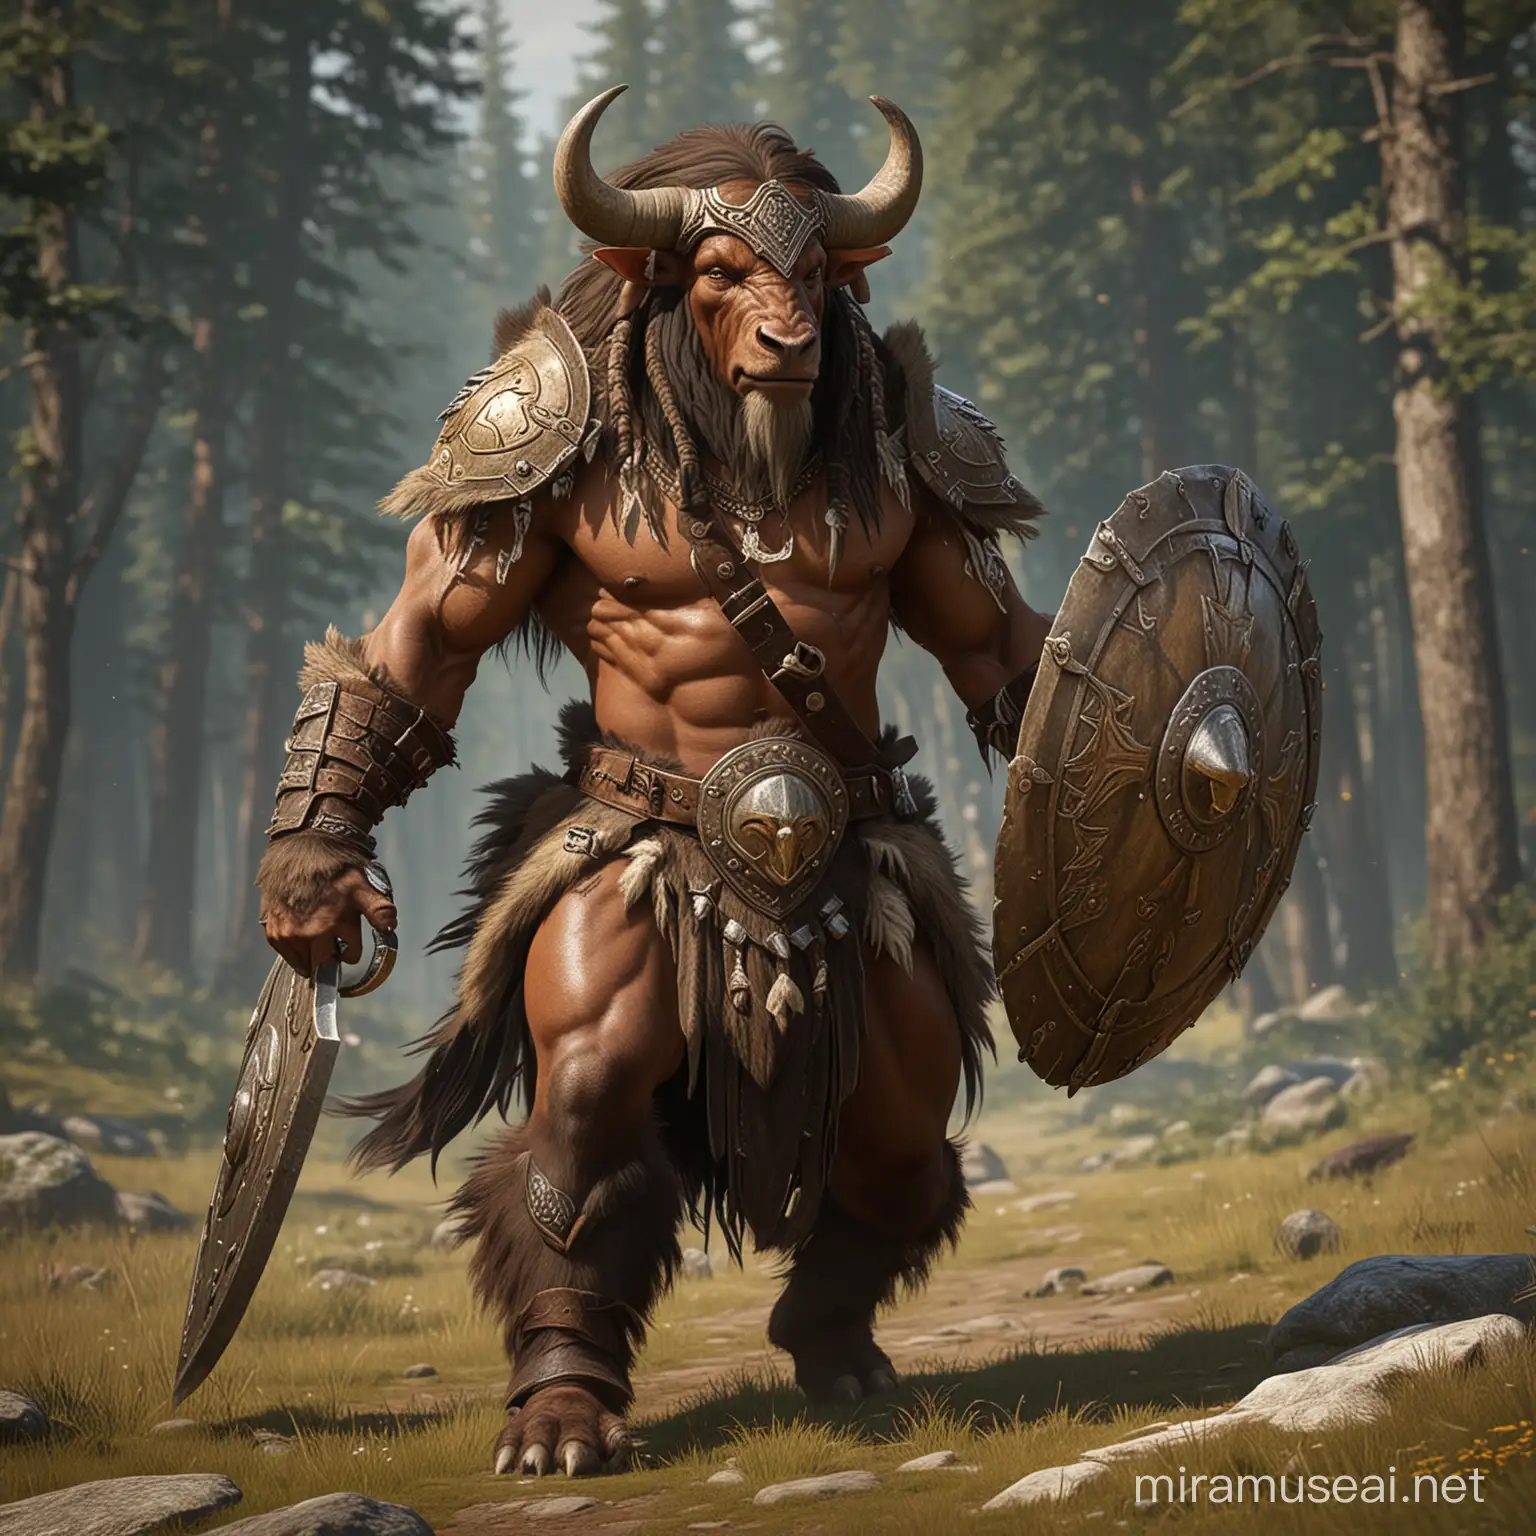 Tauren Warrior with Shield named "Hoschi"